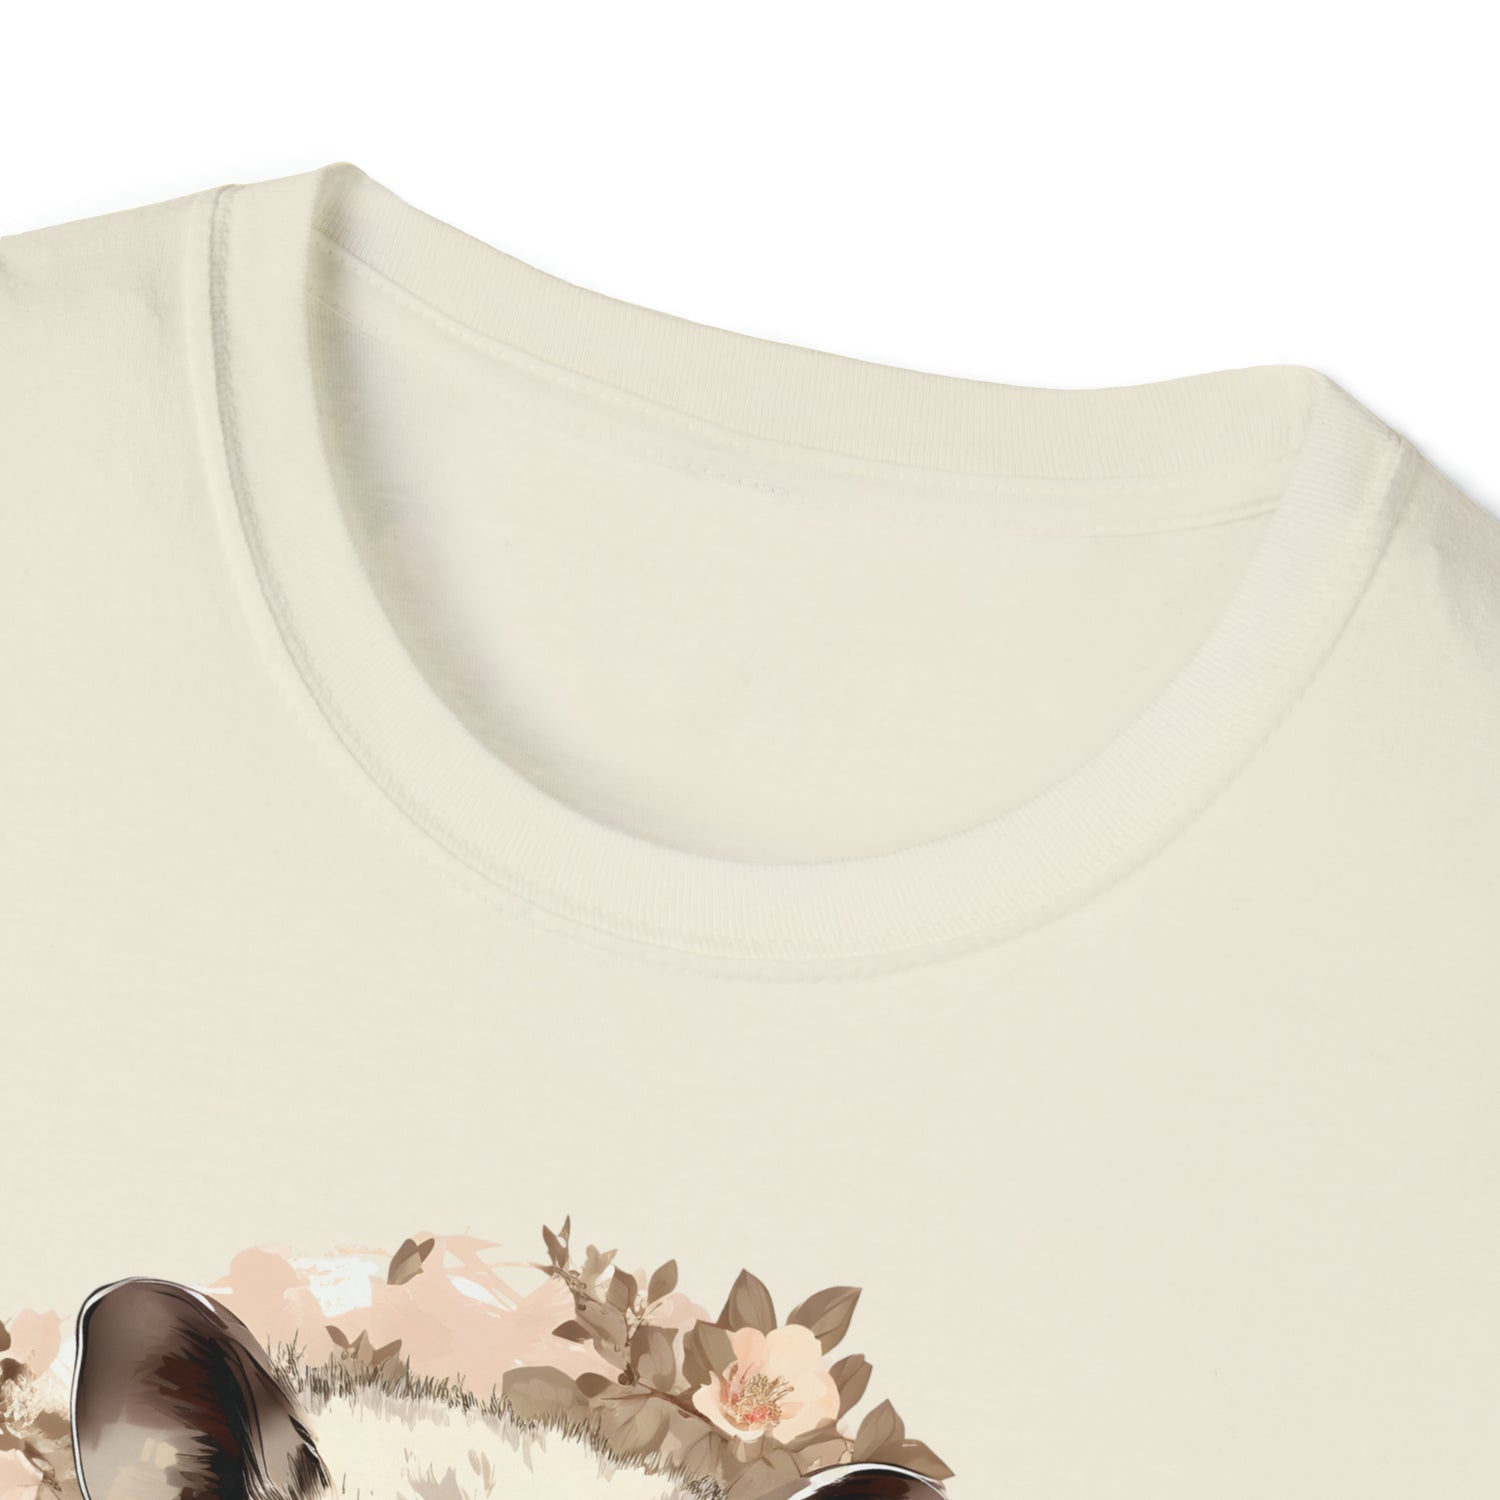 Opossum Floral Vintage Design T-Shirt - CosmicDeva